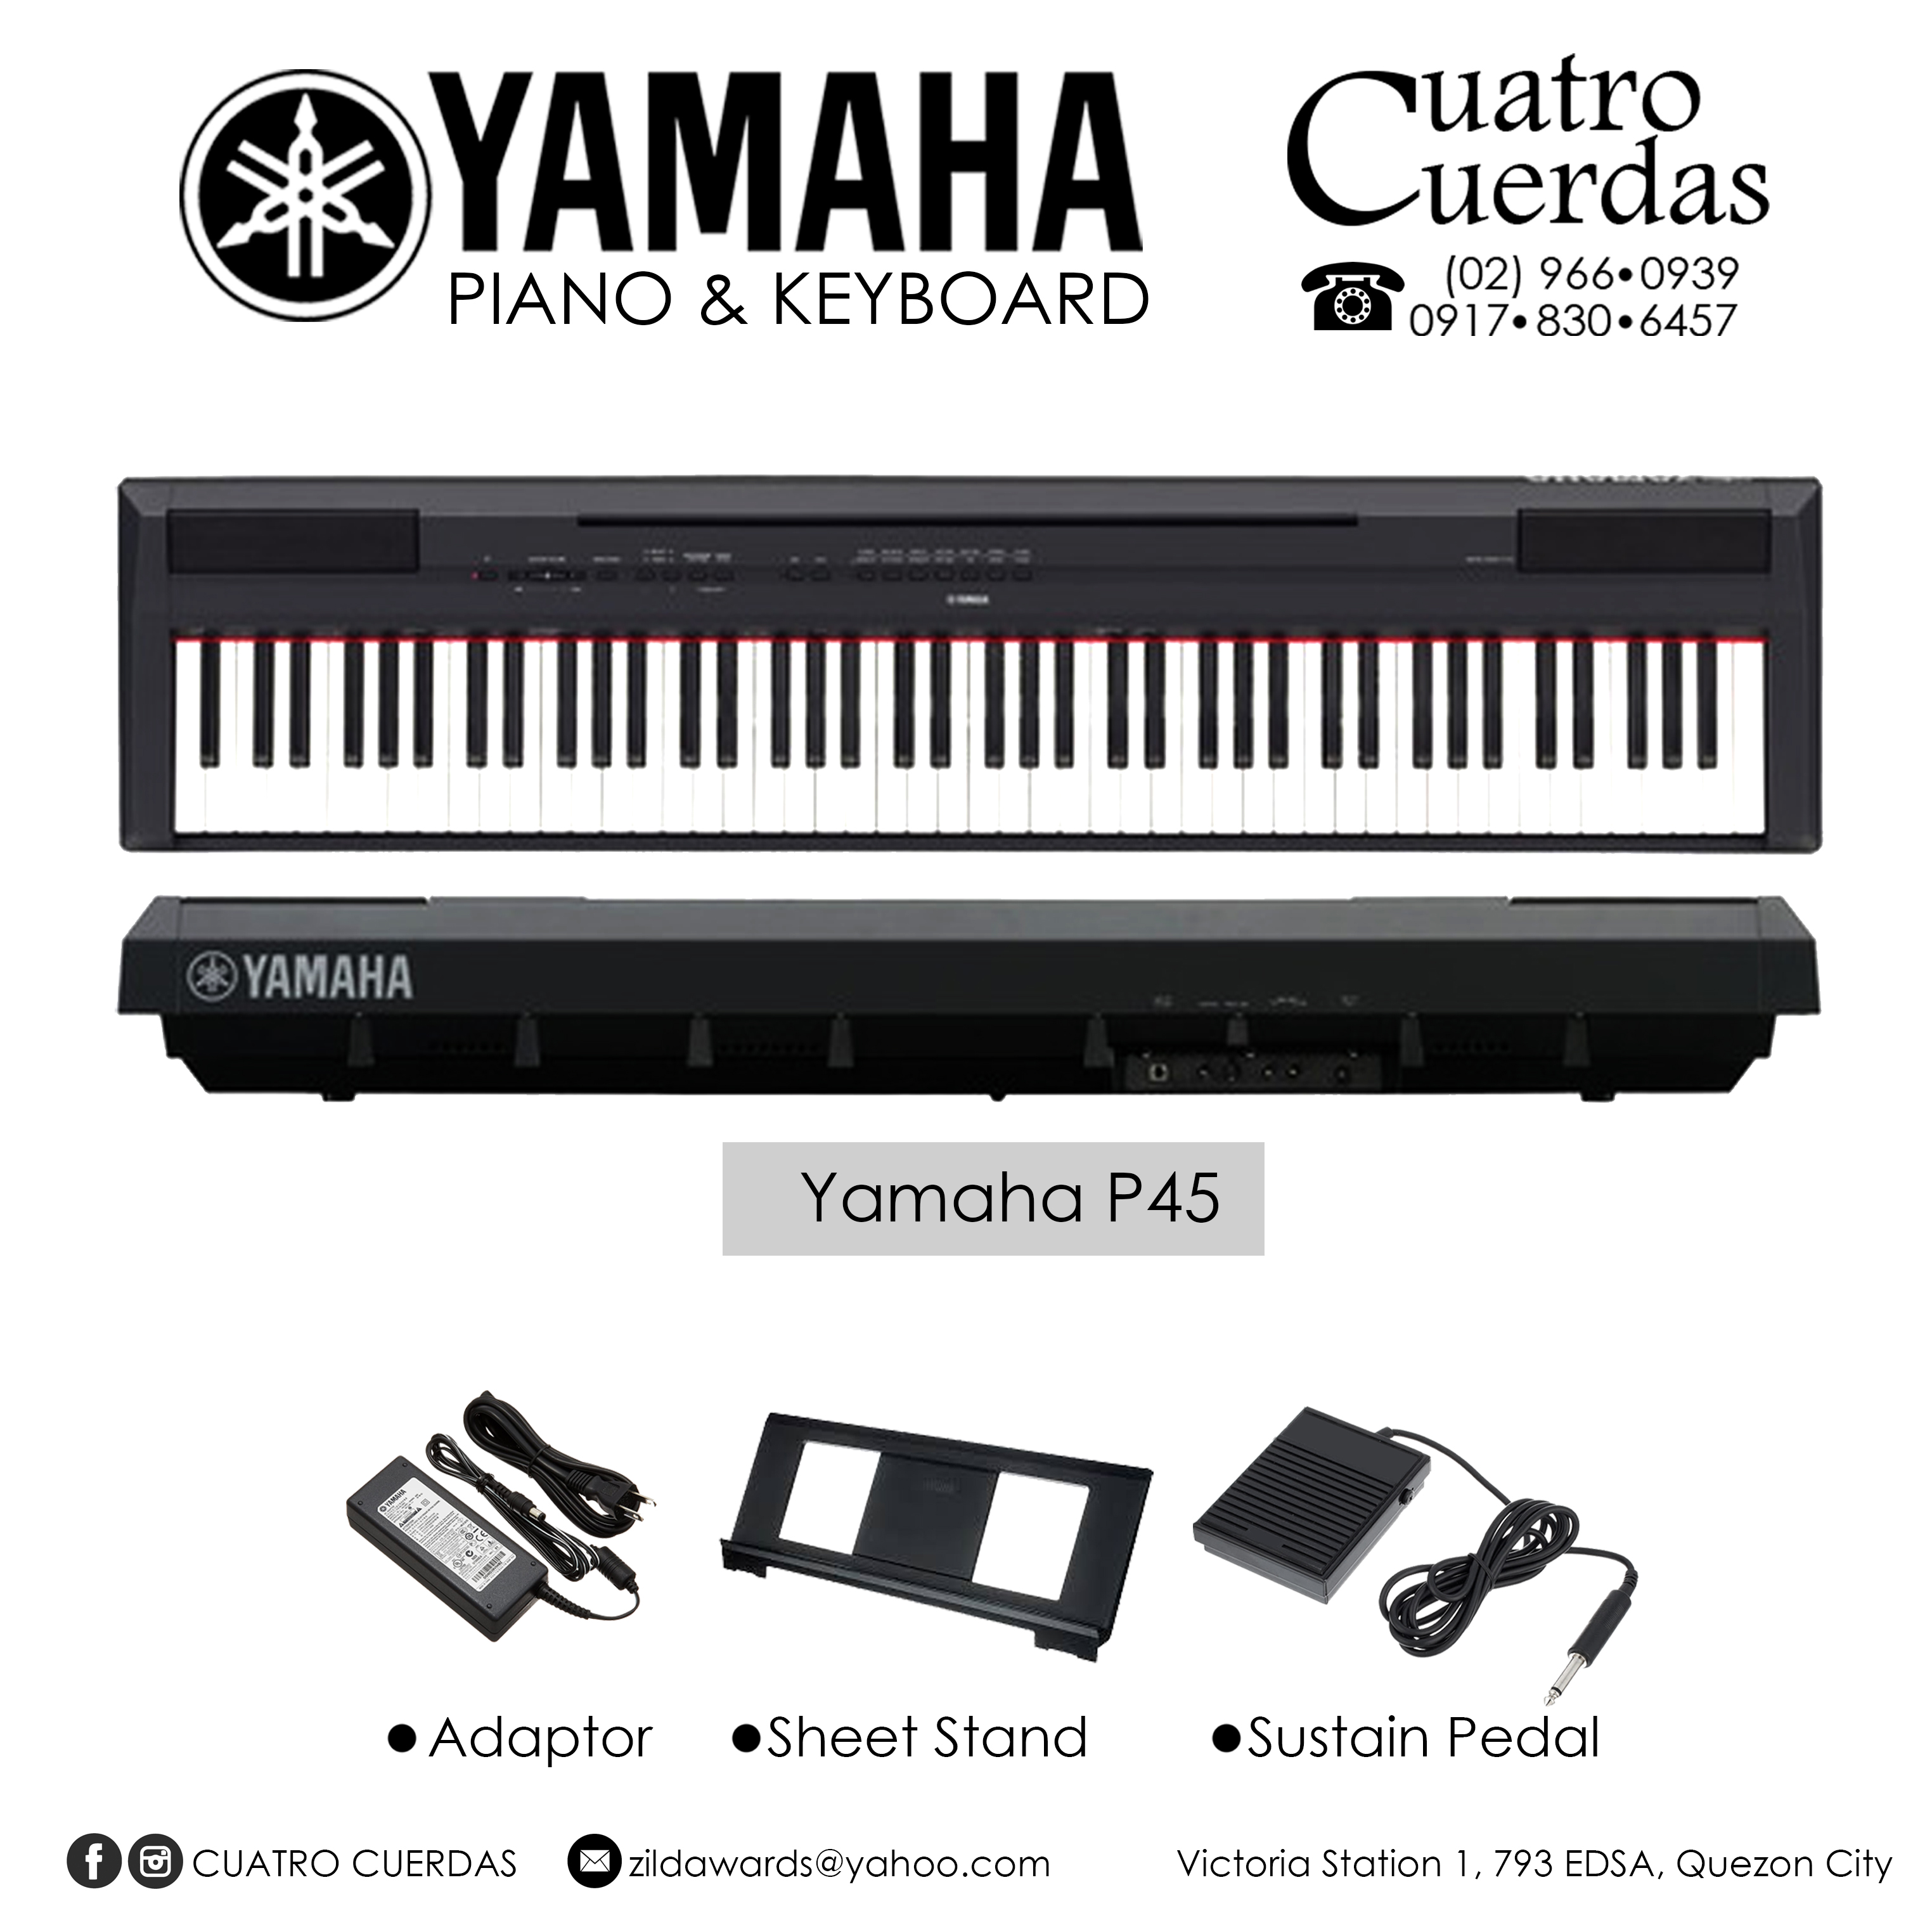 Yamaha P-45 88-Keys Digital Piano - Black